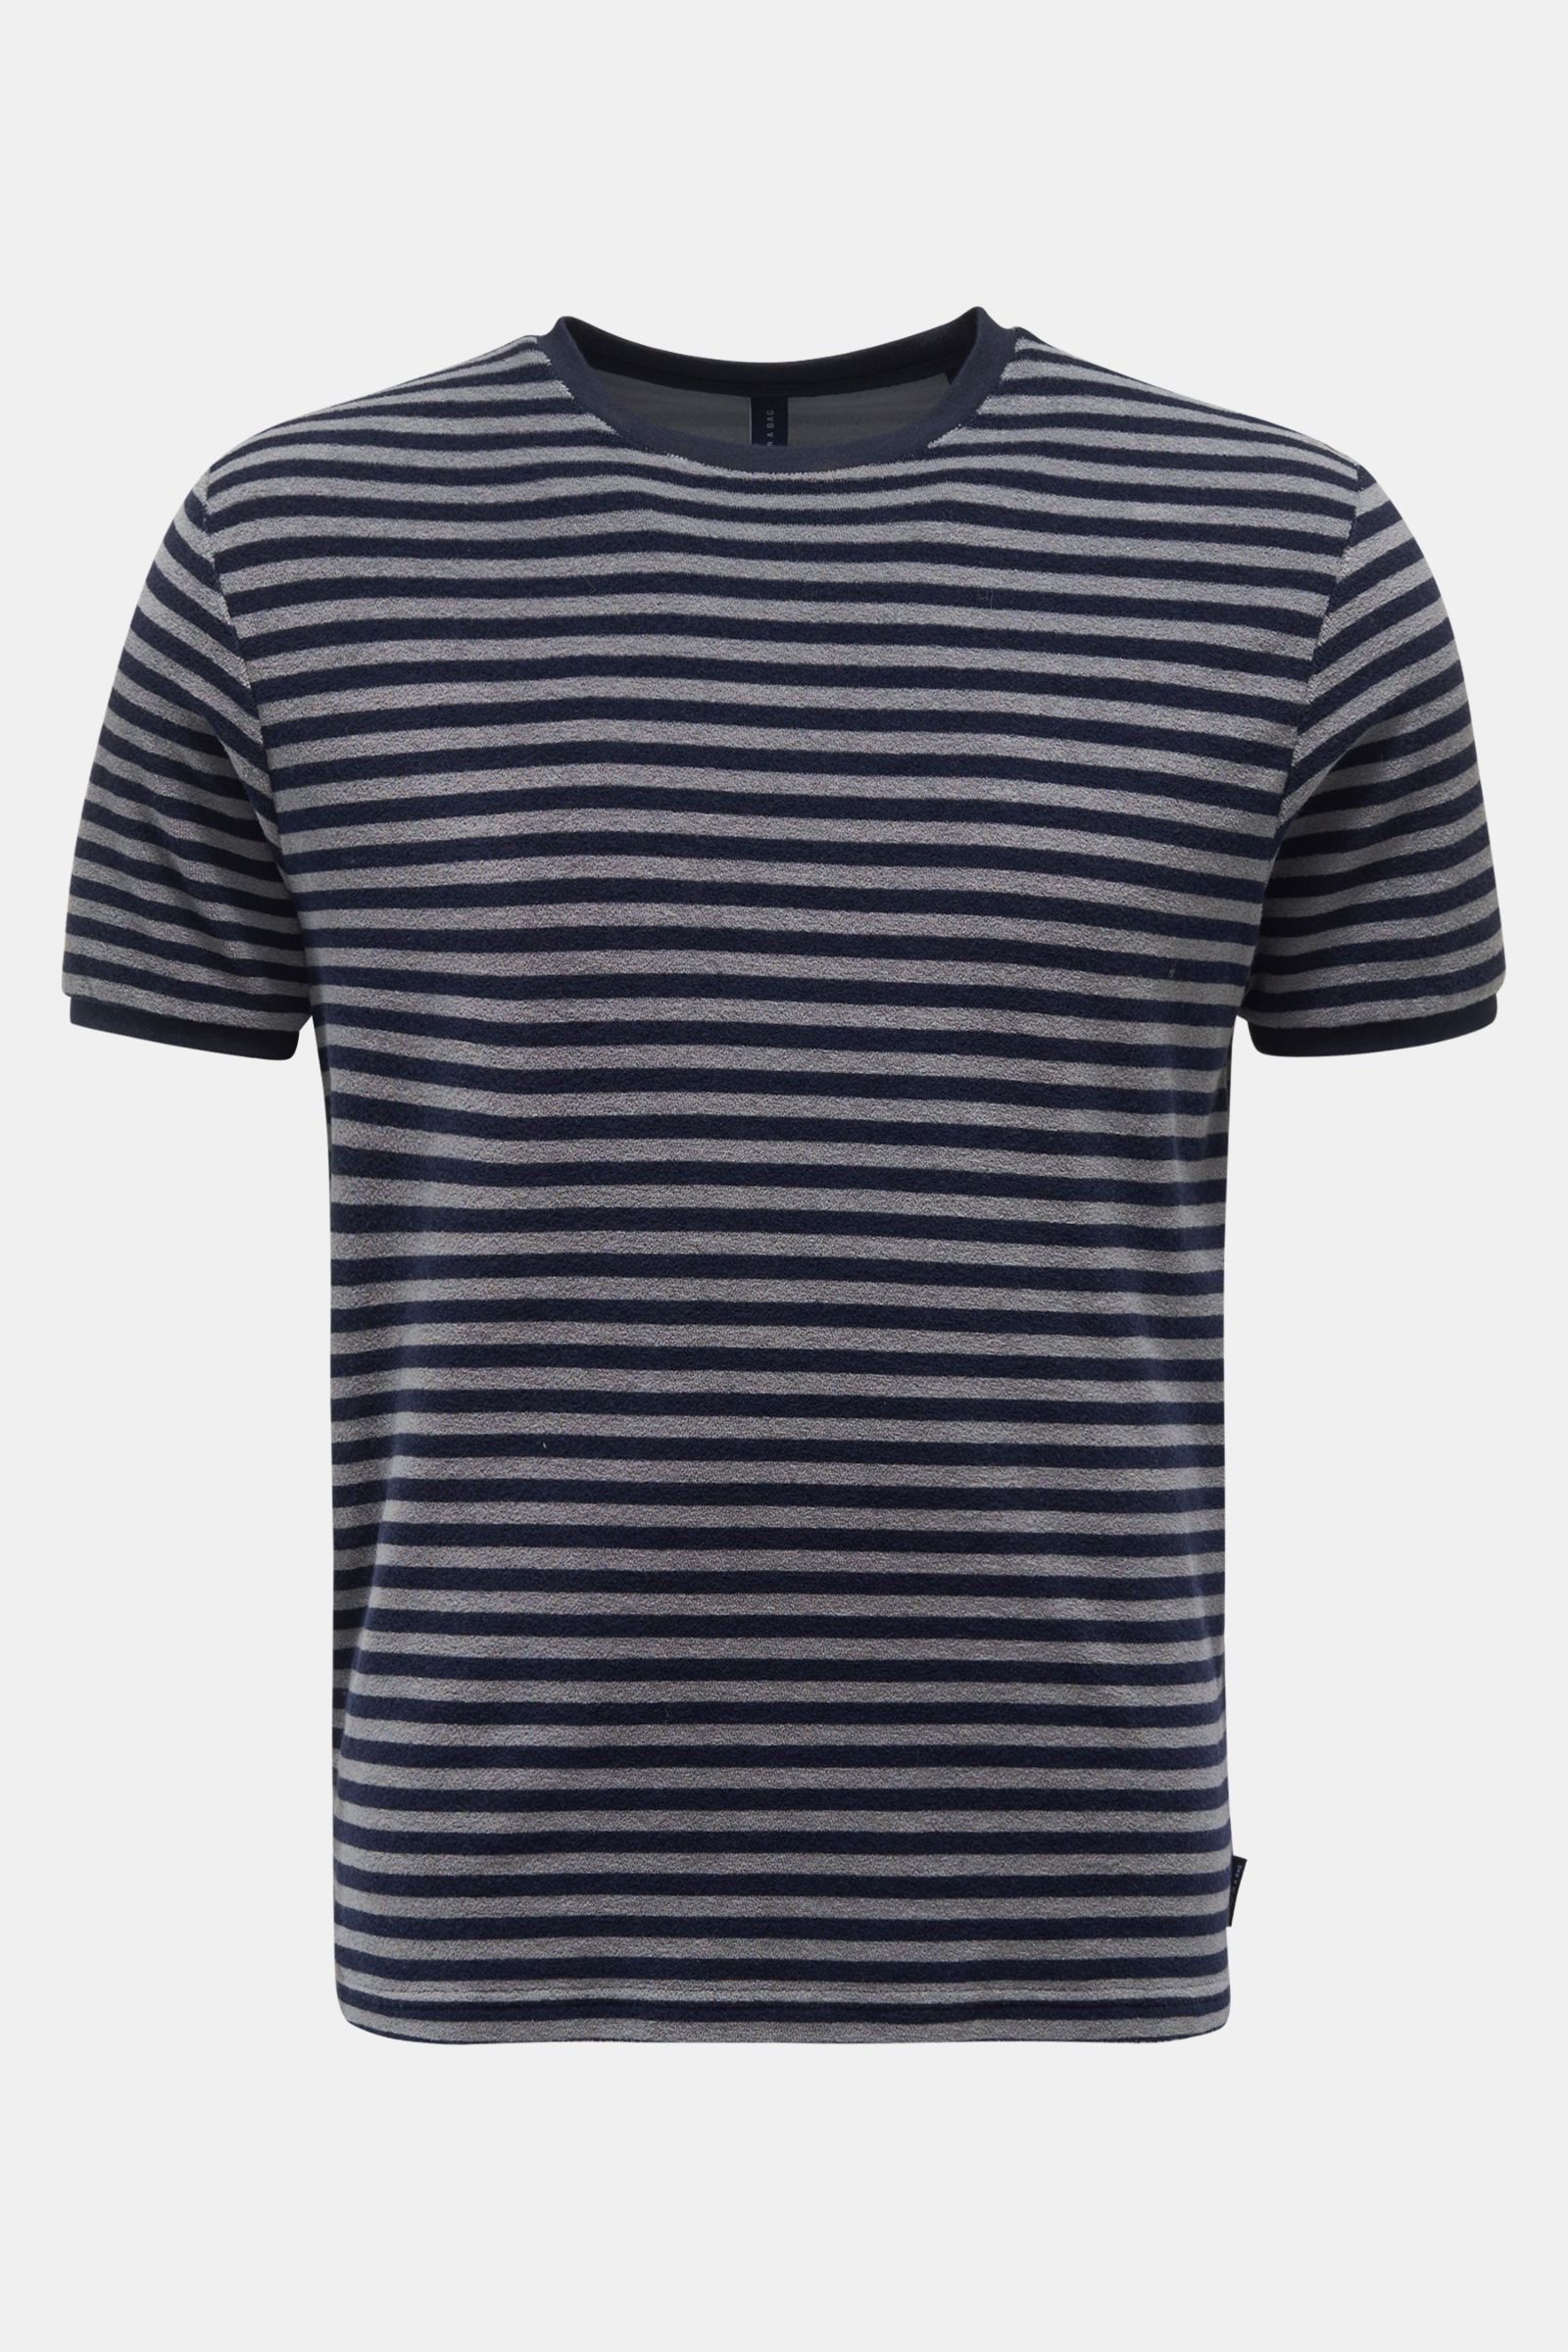 Terrycloth crew neck T-shirt 'Terry Stripe Tee' grey/dark navy striped